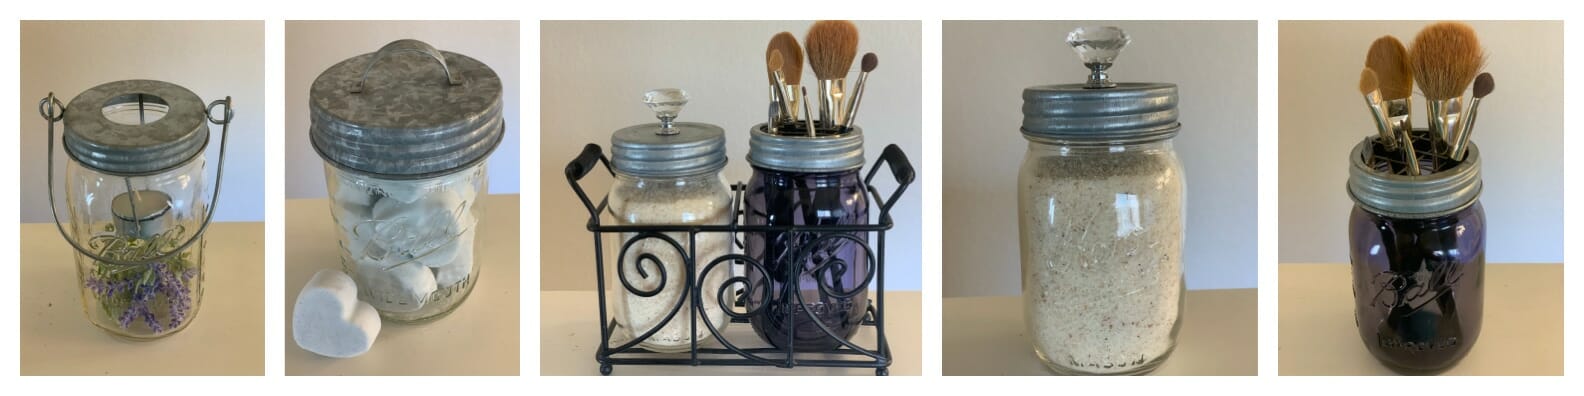 mason-jar-lifestyle-DIY-spa-day-with-mason-jar-accessories-lids-galvanized-frog-flower-tea-light-holder-handle-decorative-lid-spiral-caddy-makeup-brushes-bath-bomb-salt-bath-